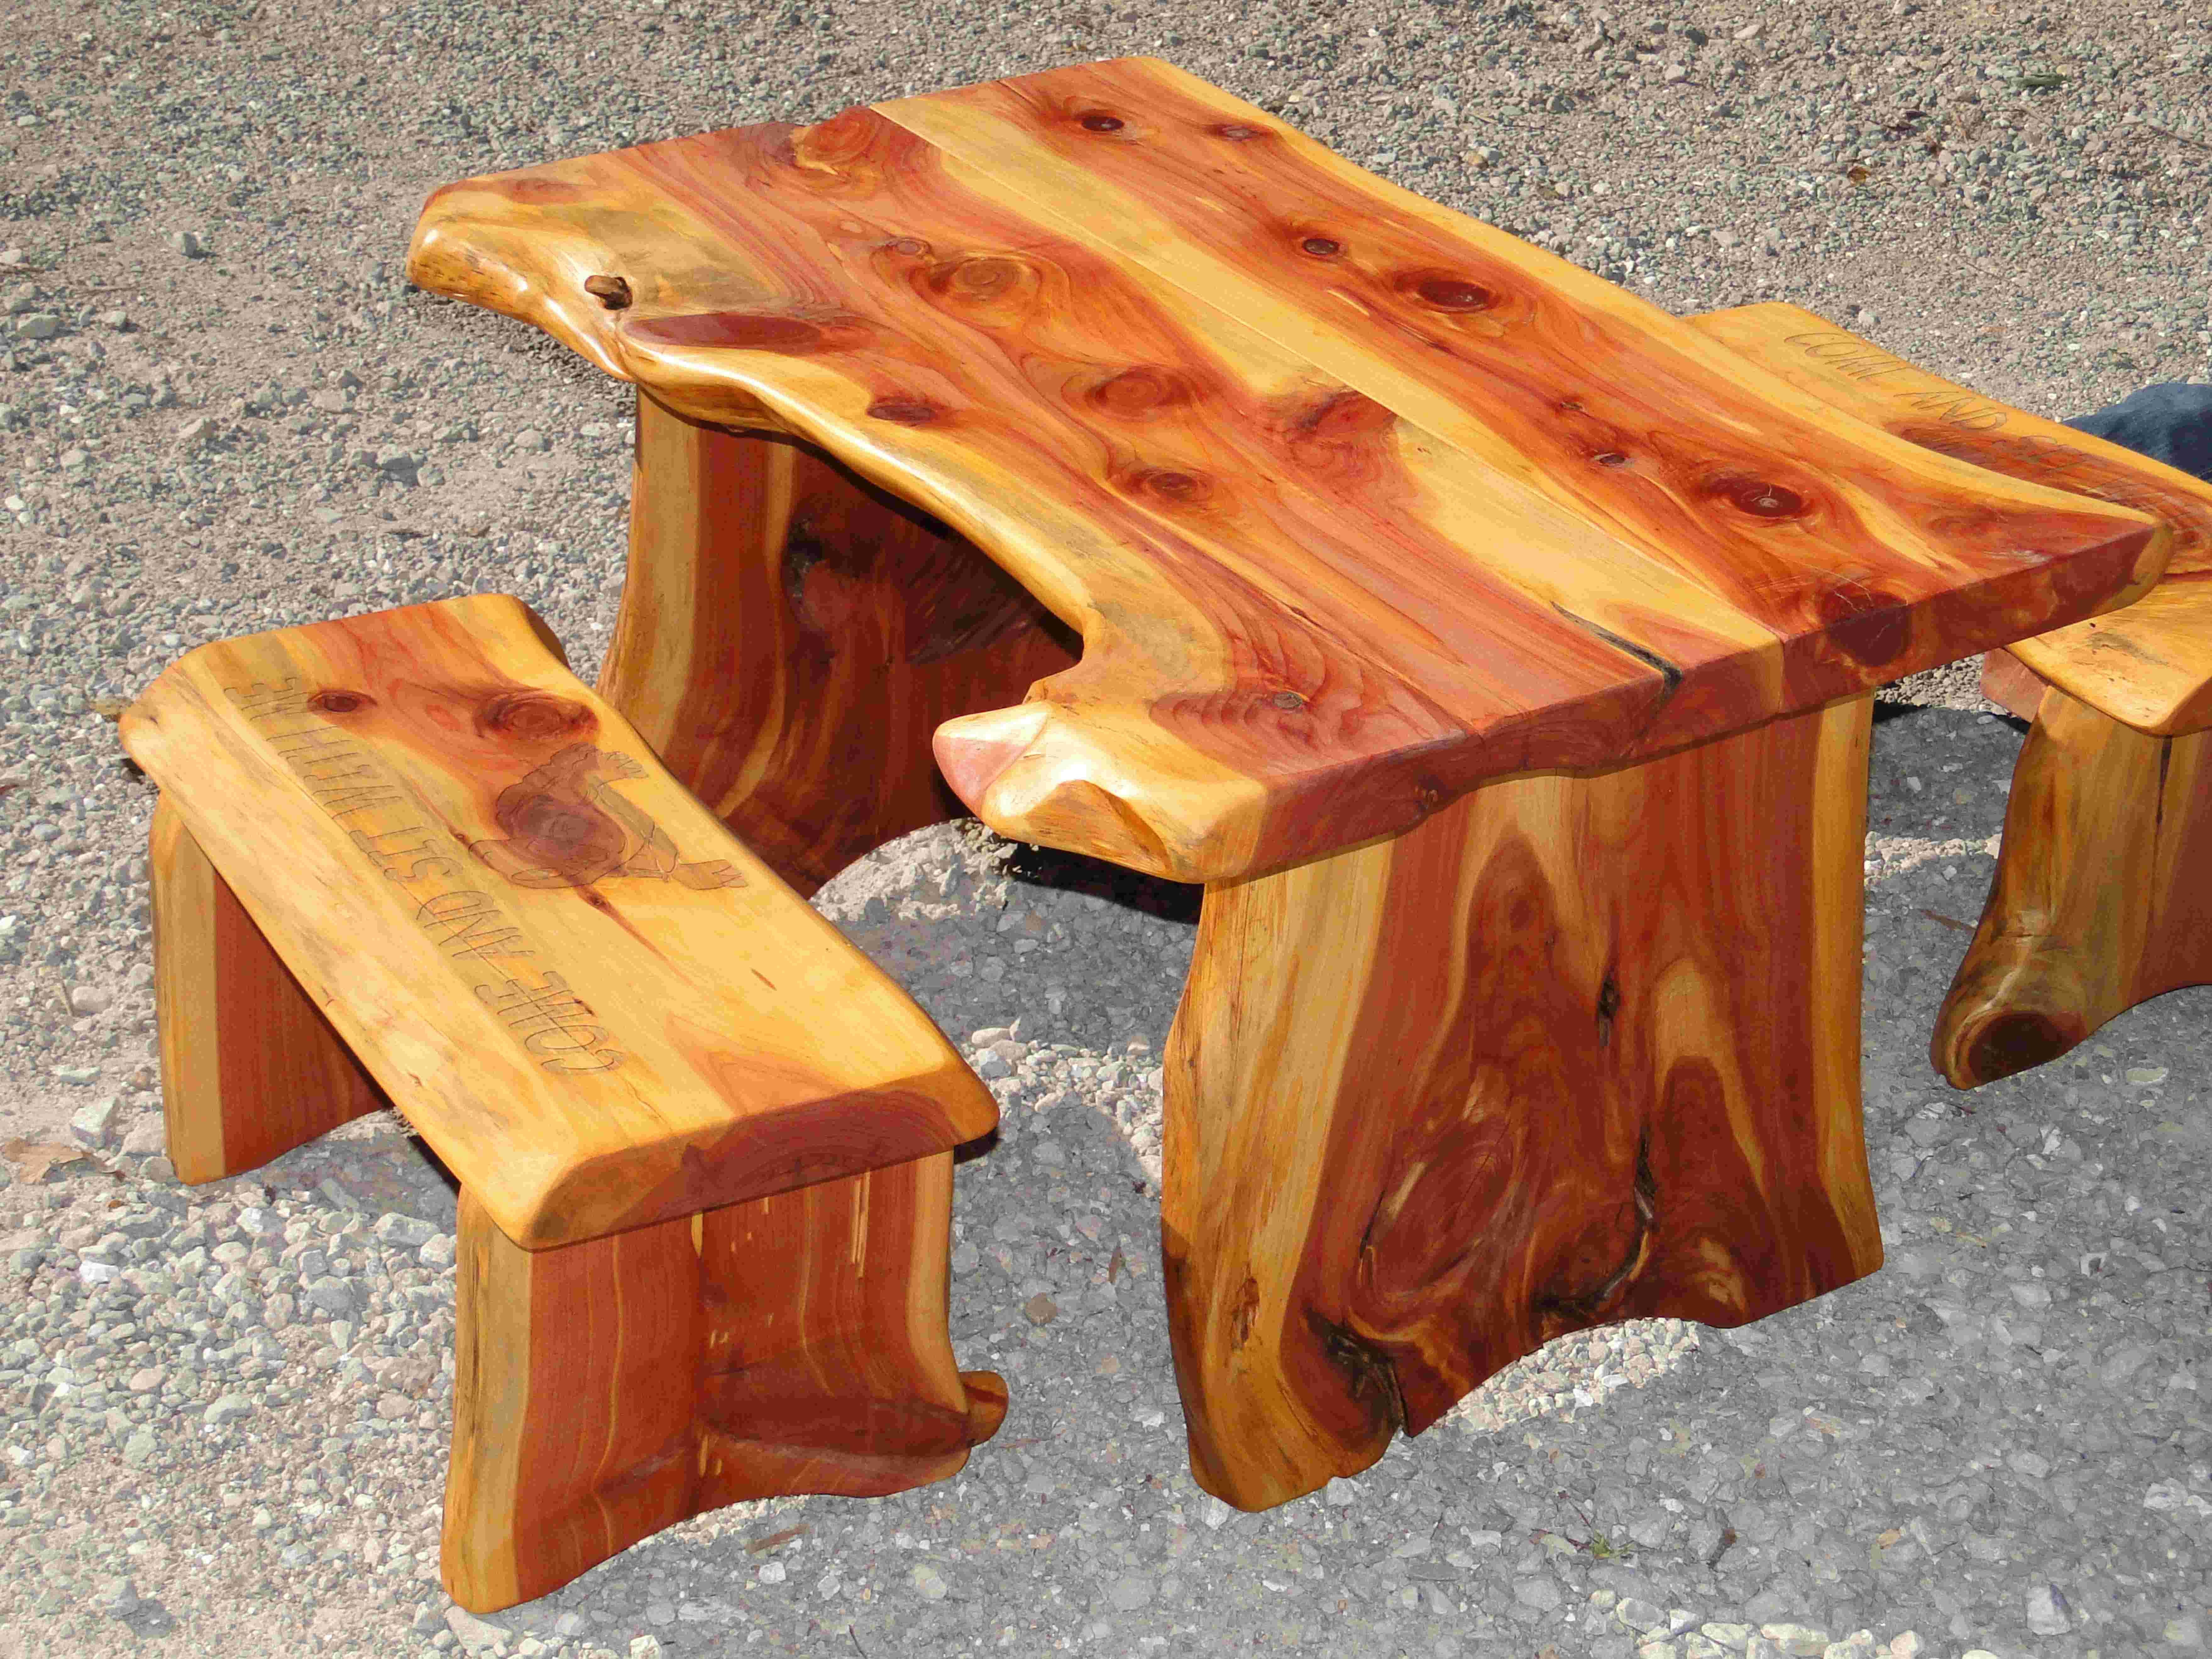 Cedar kids table, sold for $349